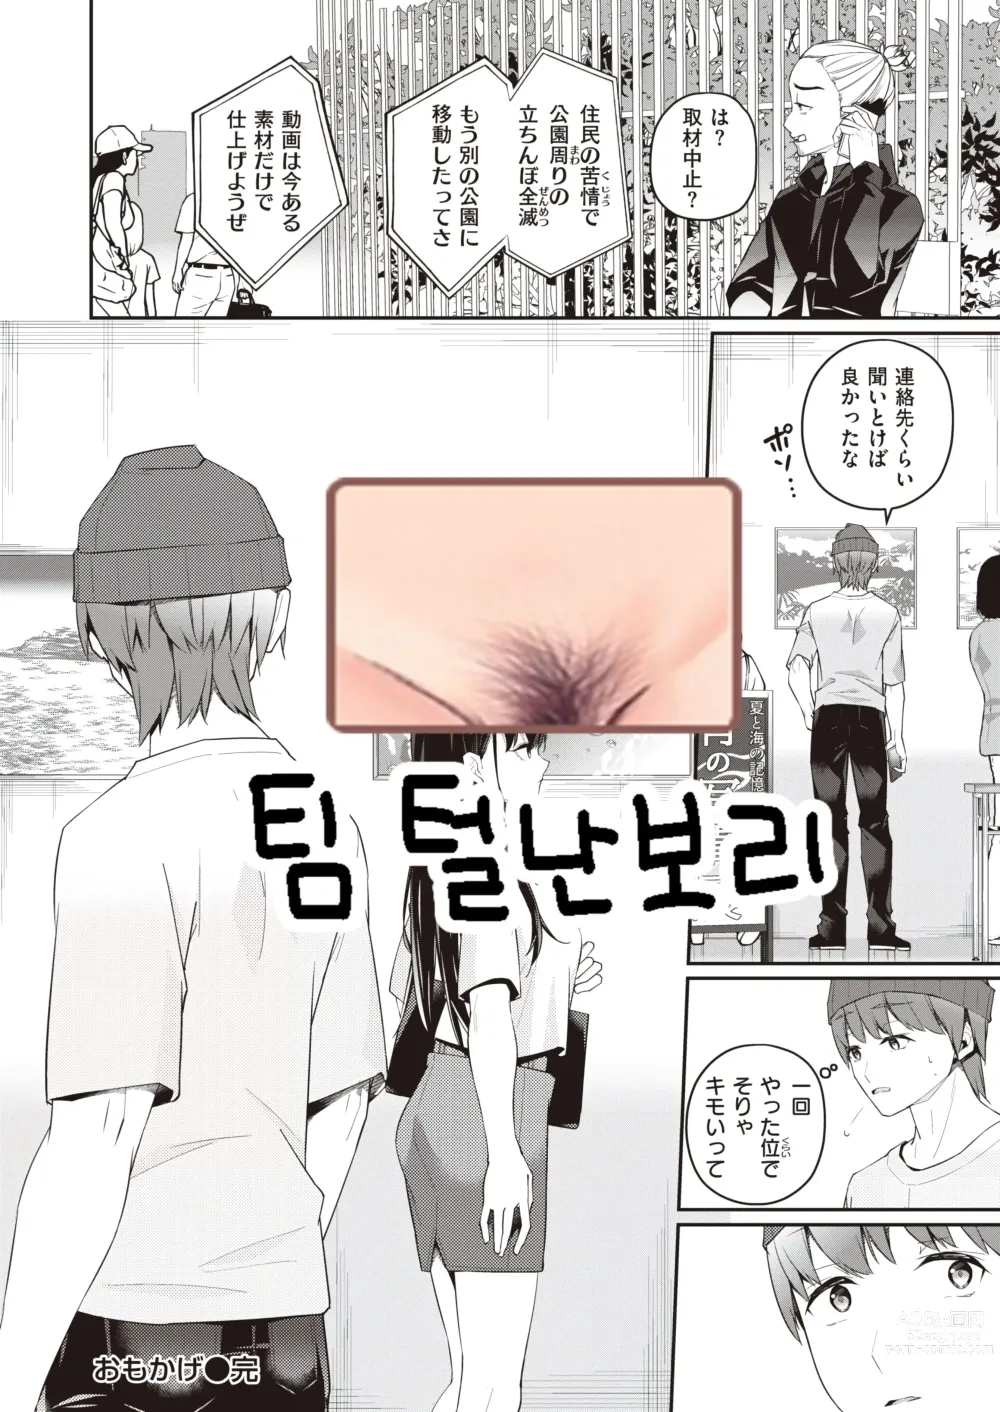 Page 27 of manga Omokage - past shadow